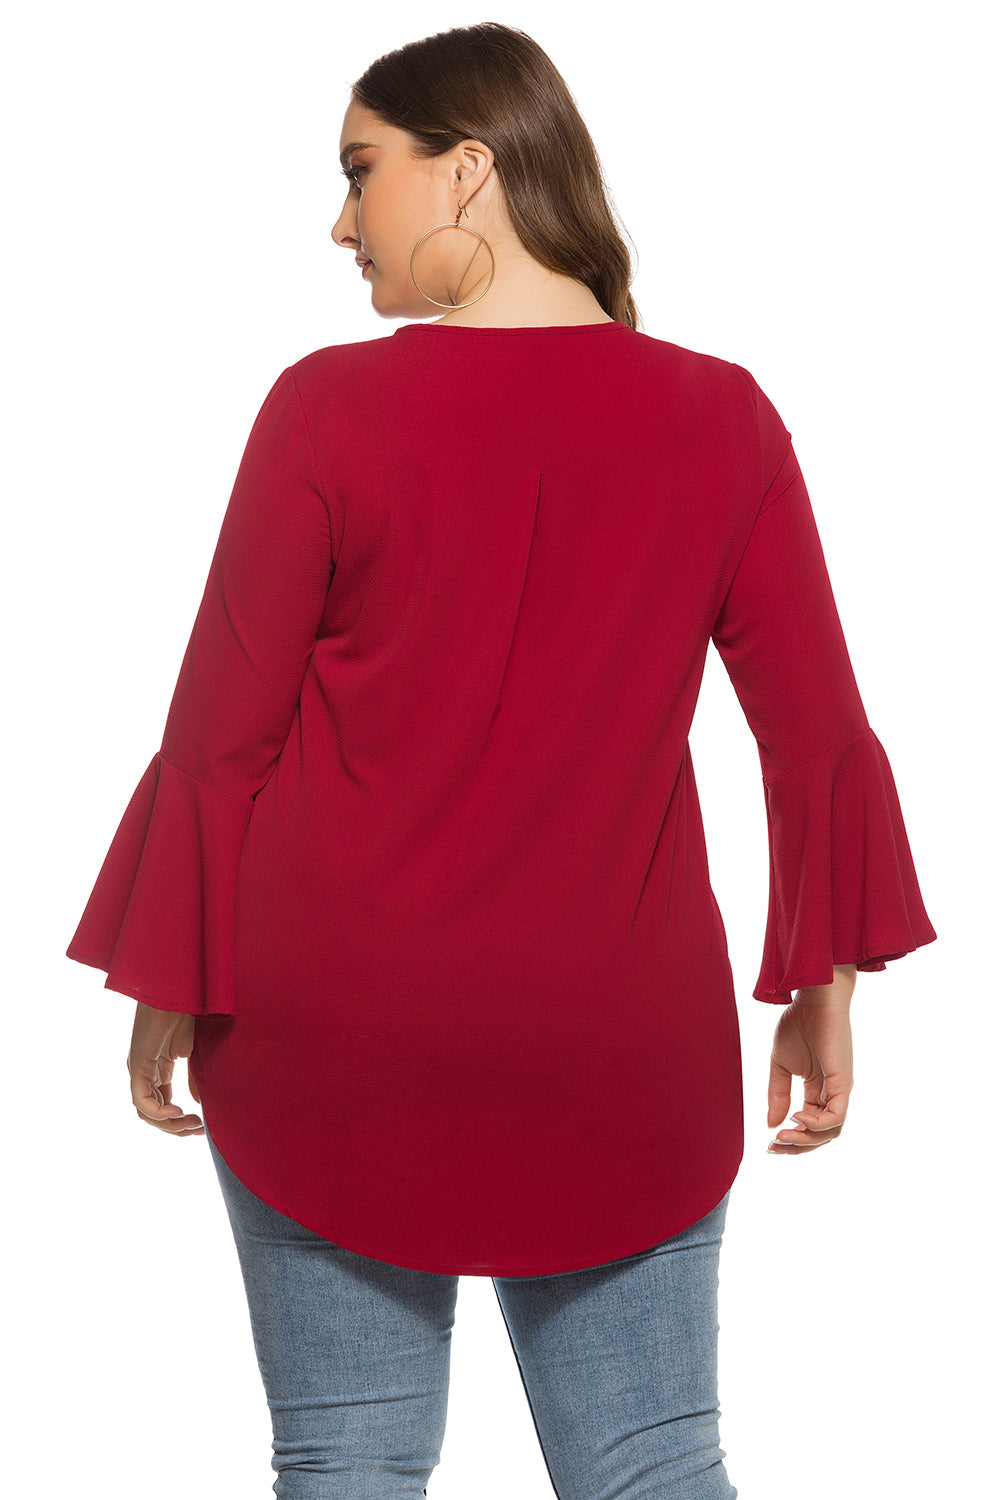 Women's plus size long pelpum sleeve loose tunic blouse top Sai Feel